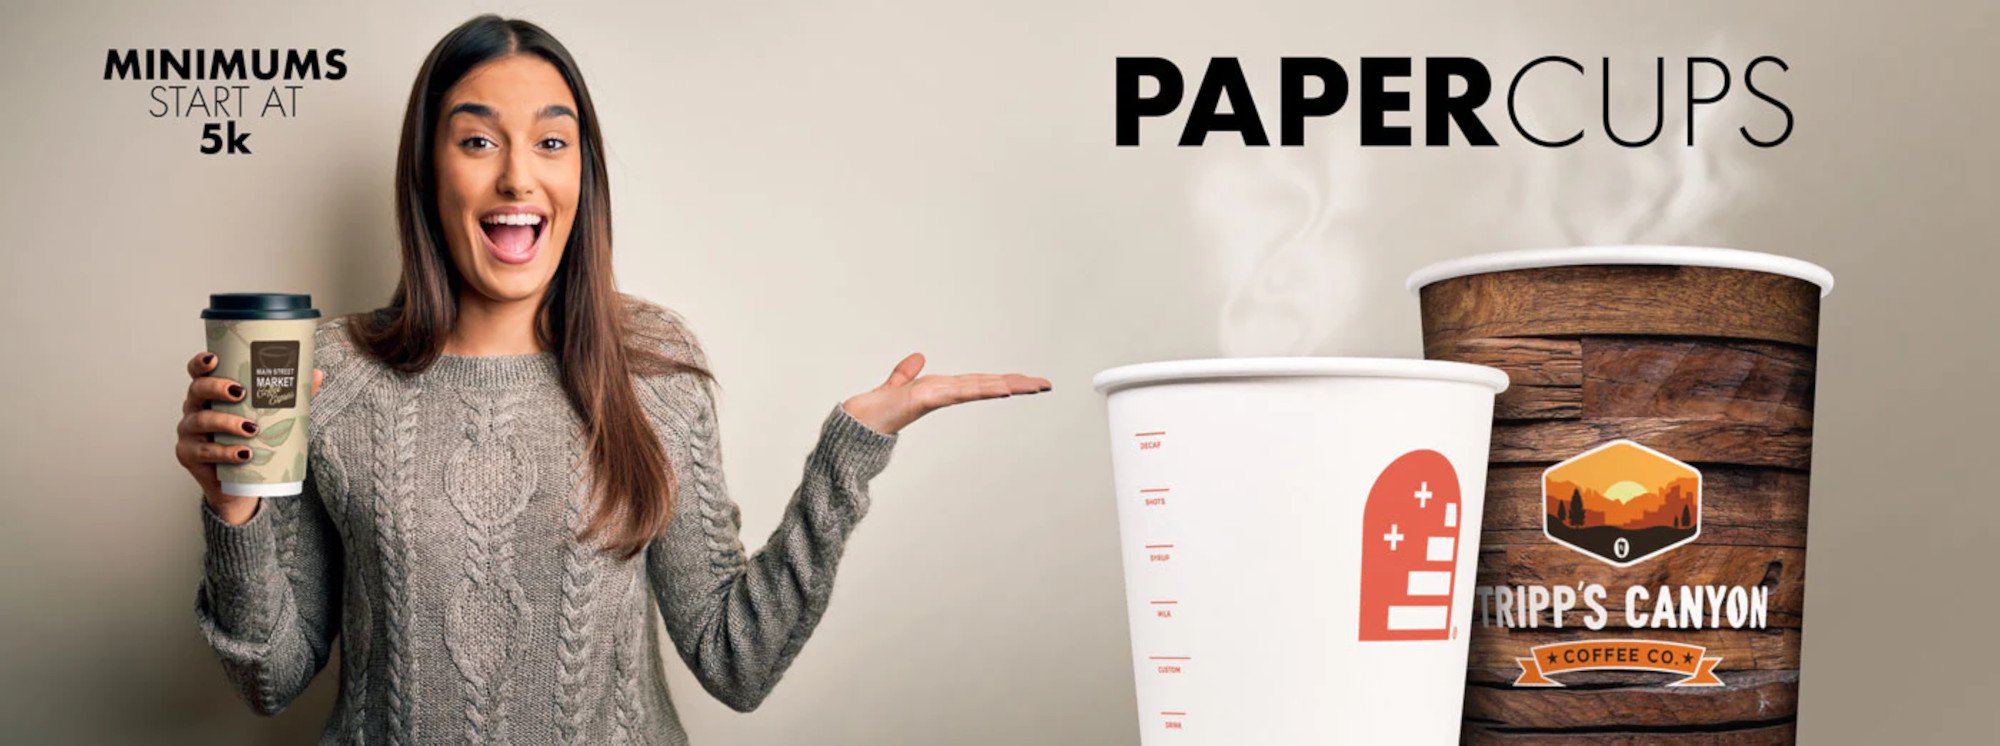 Paper Cups - minimums start at 5k